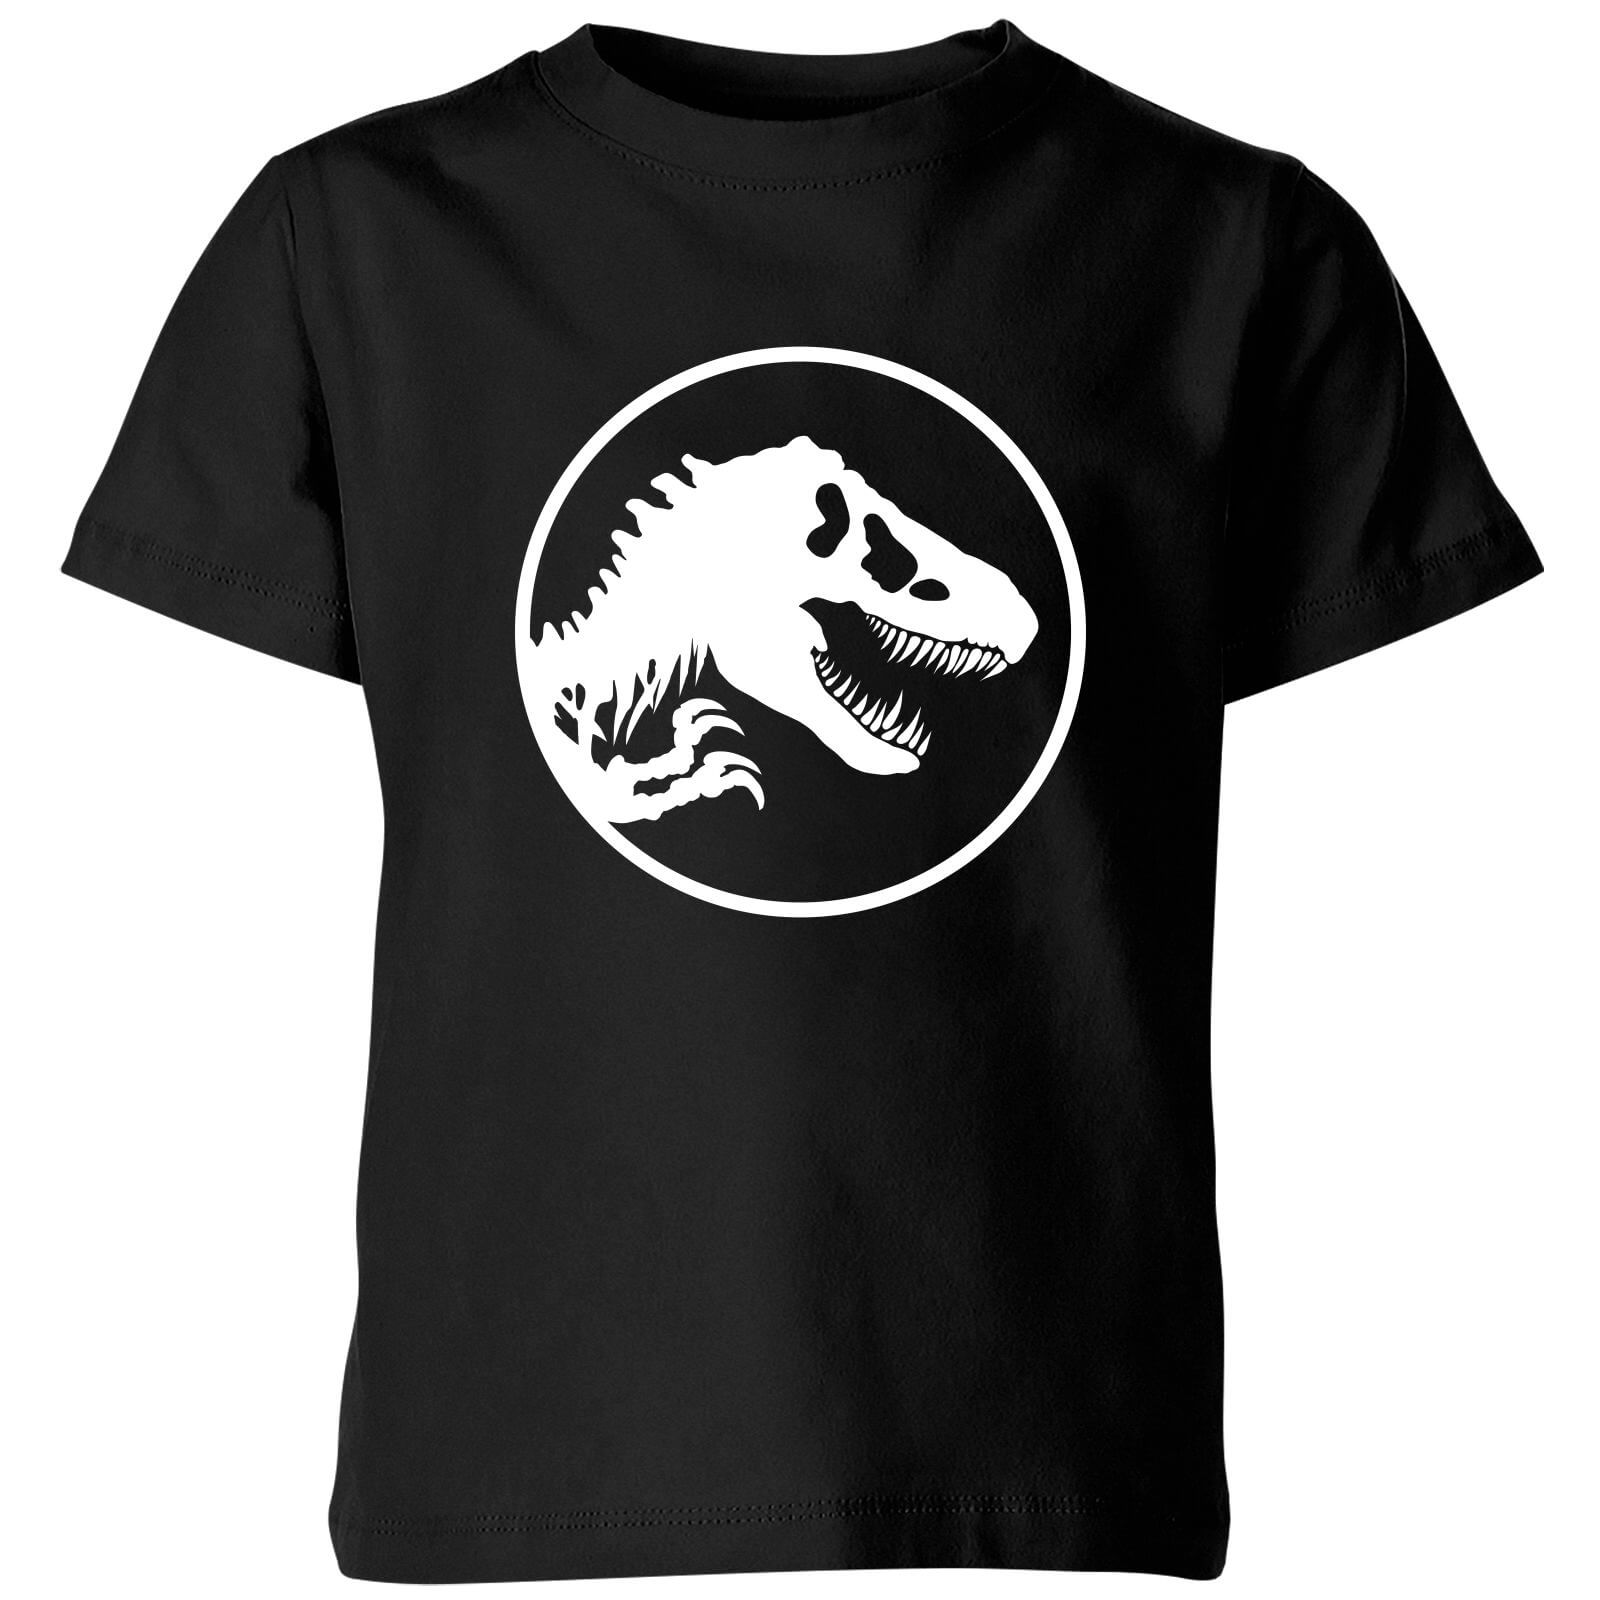 Jurassic Park Circle Logo Kids' T-Shirt - Black - 3-4 Years - Black